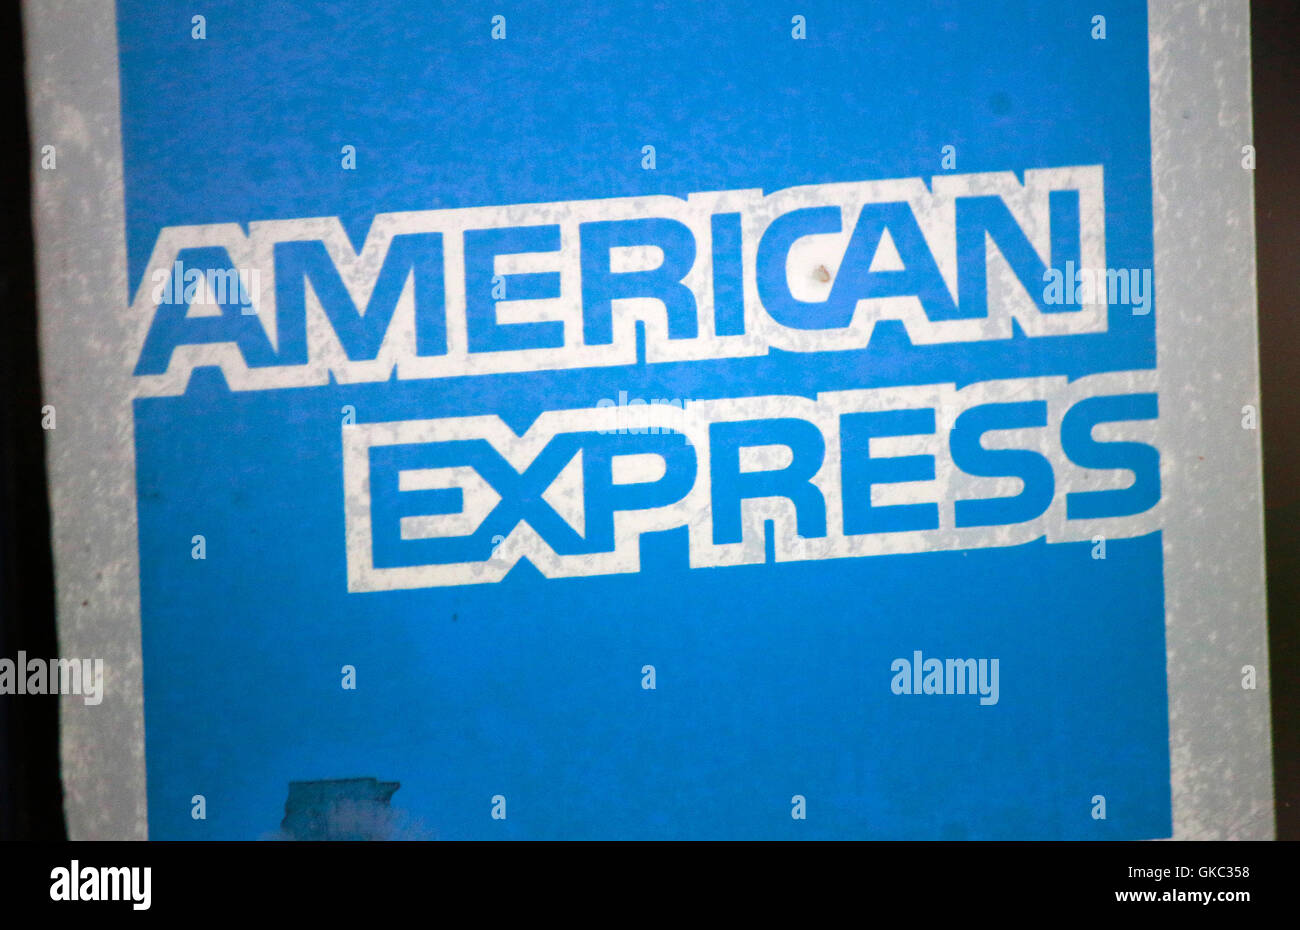 Logo der Marke "American Express", Kiruna, Schweden. Stockfoto